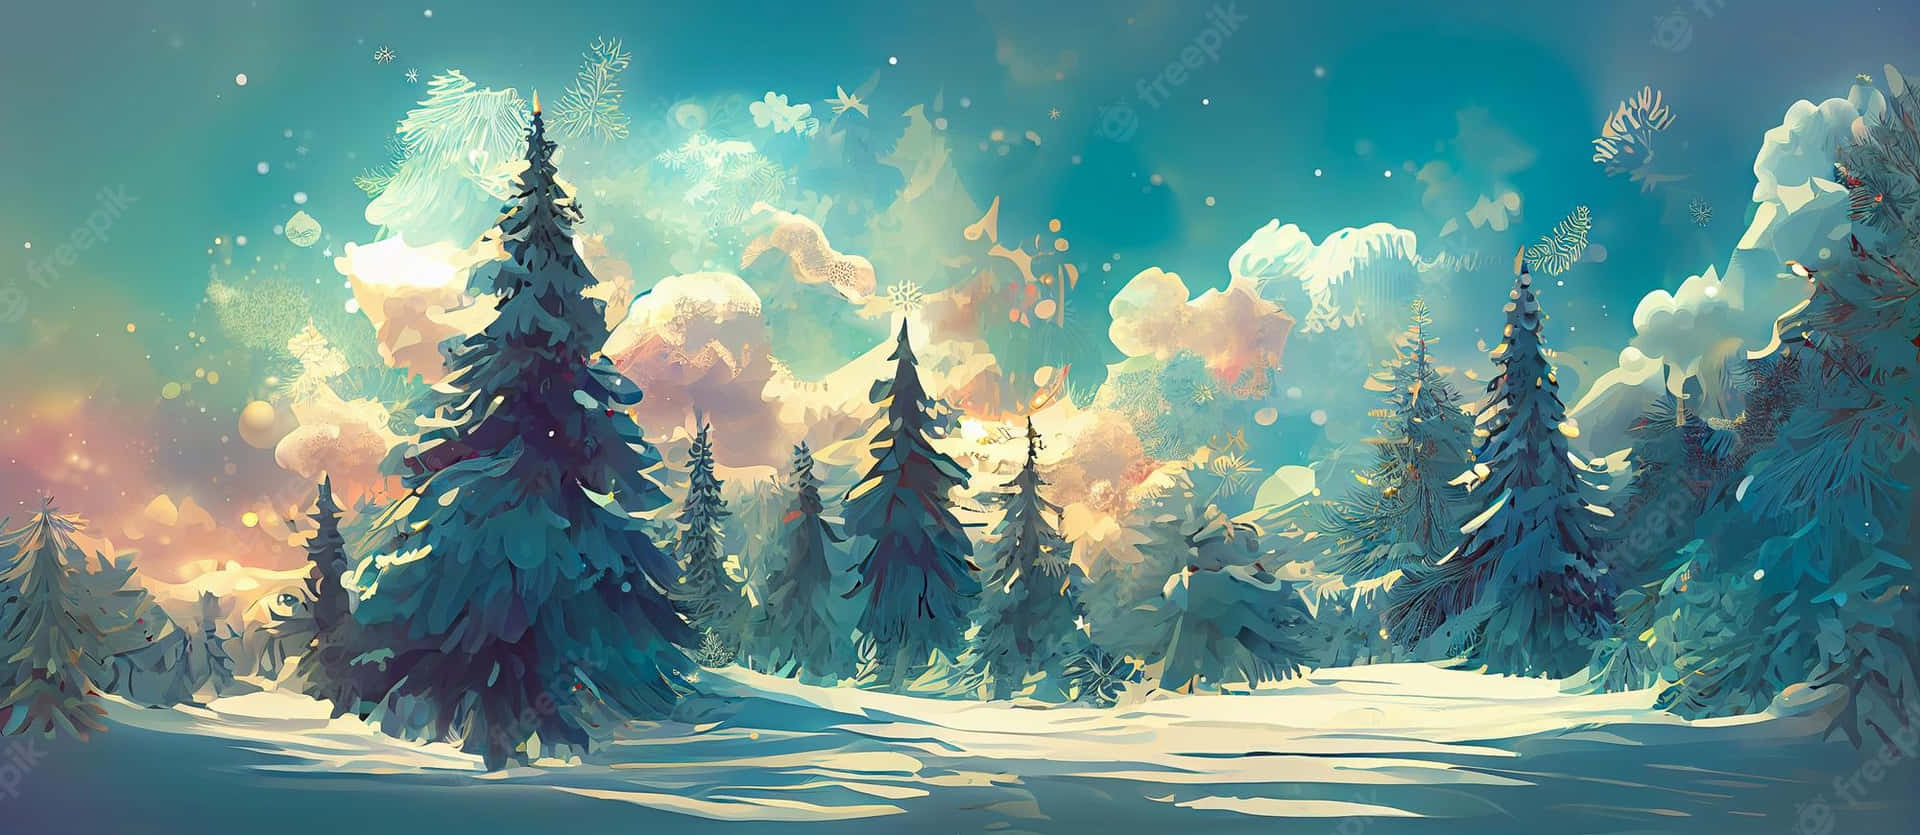 Celebrate Winter Holidays with a Festive Desktop Background Wallpaper